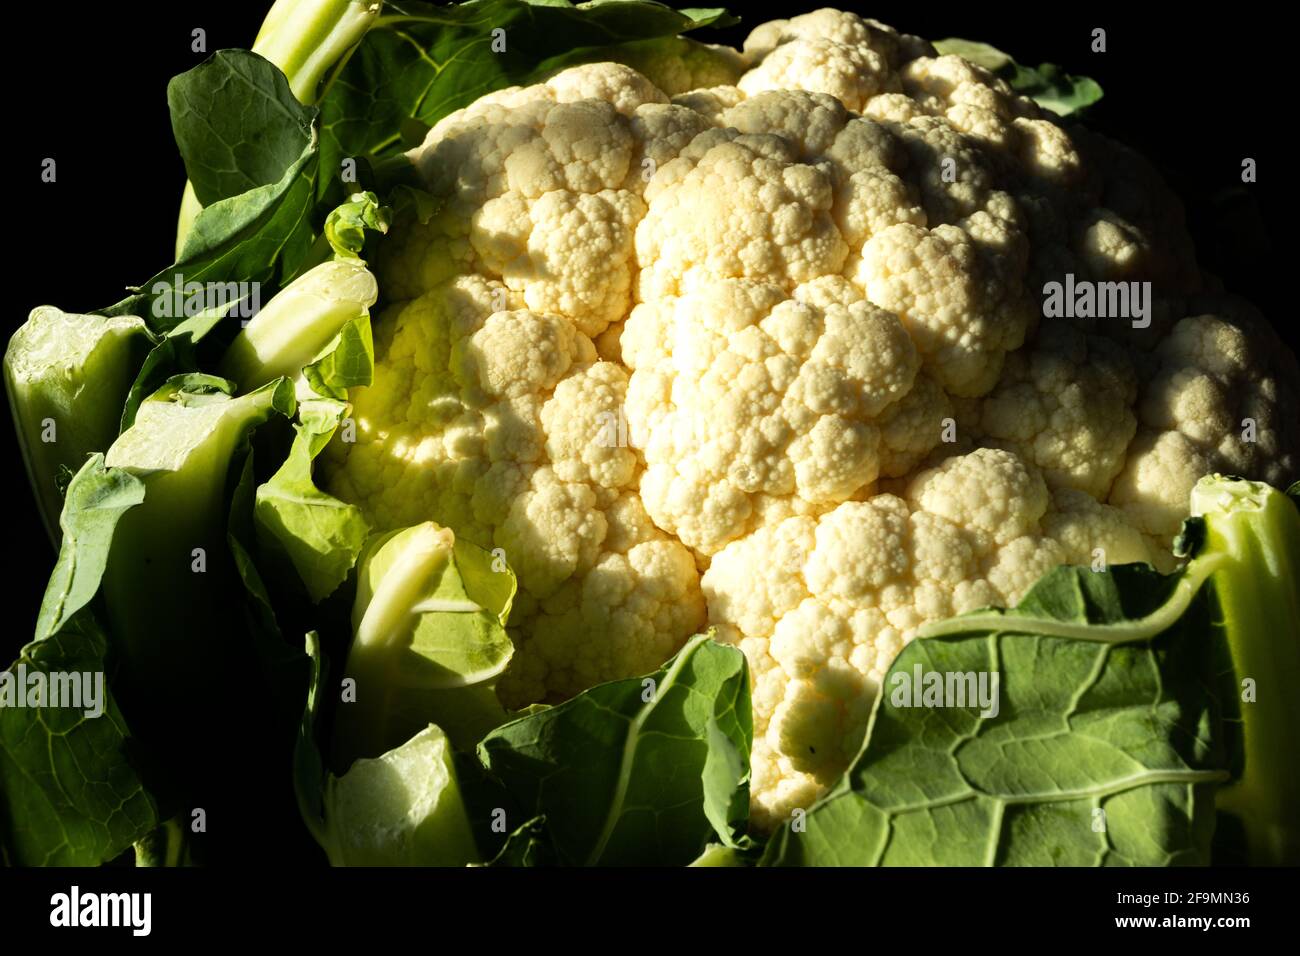 Whole cauliflower head against black background Stock Photo